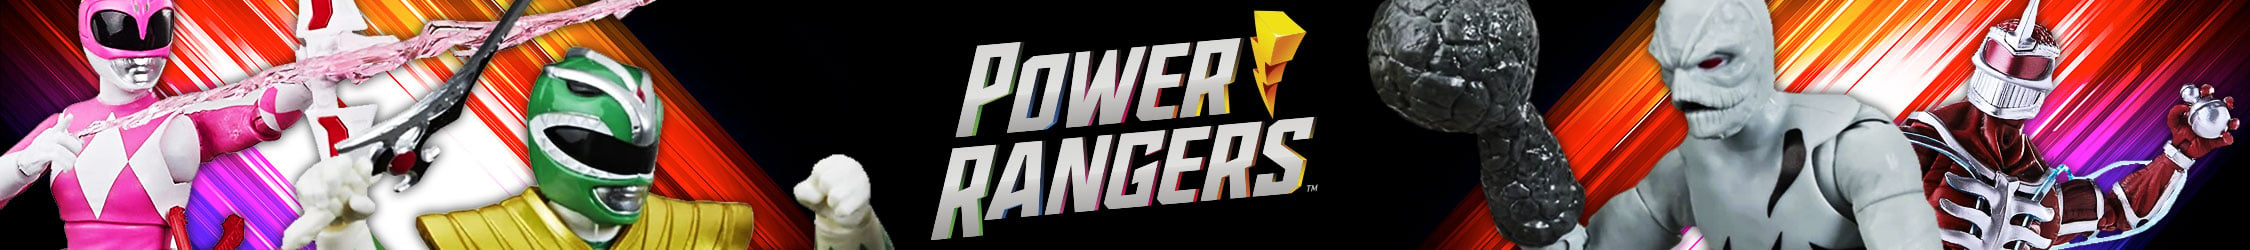 PowerRangers